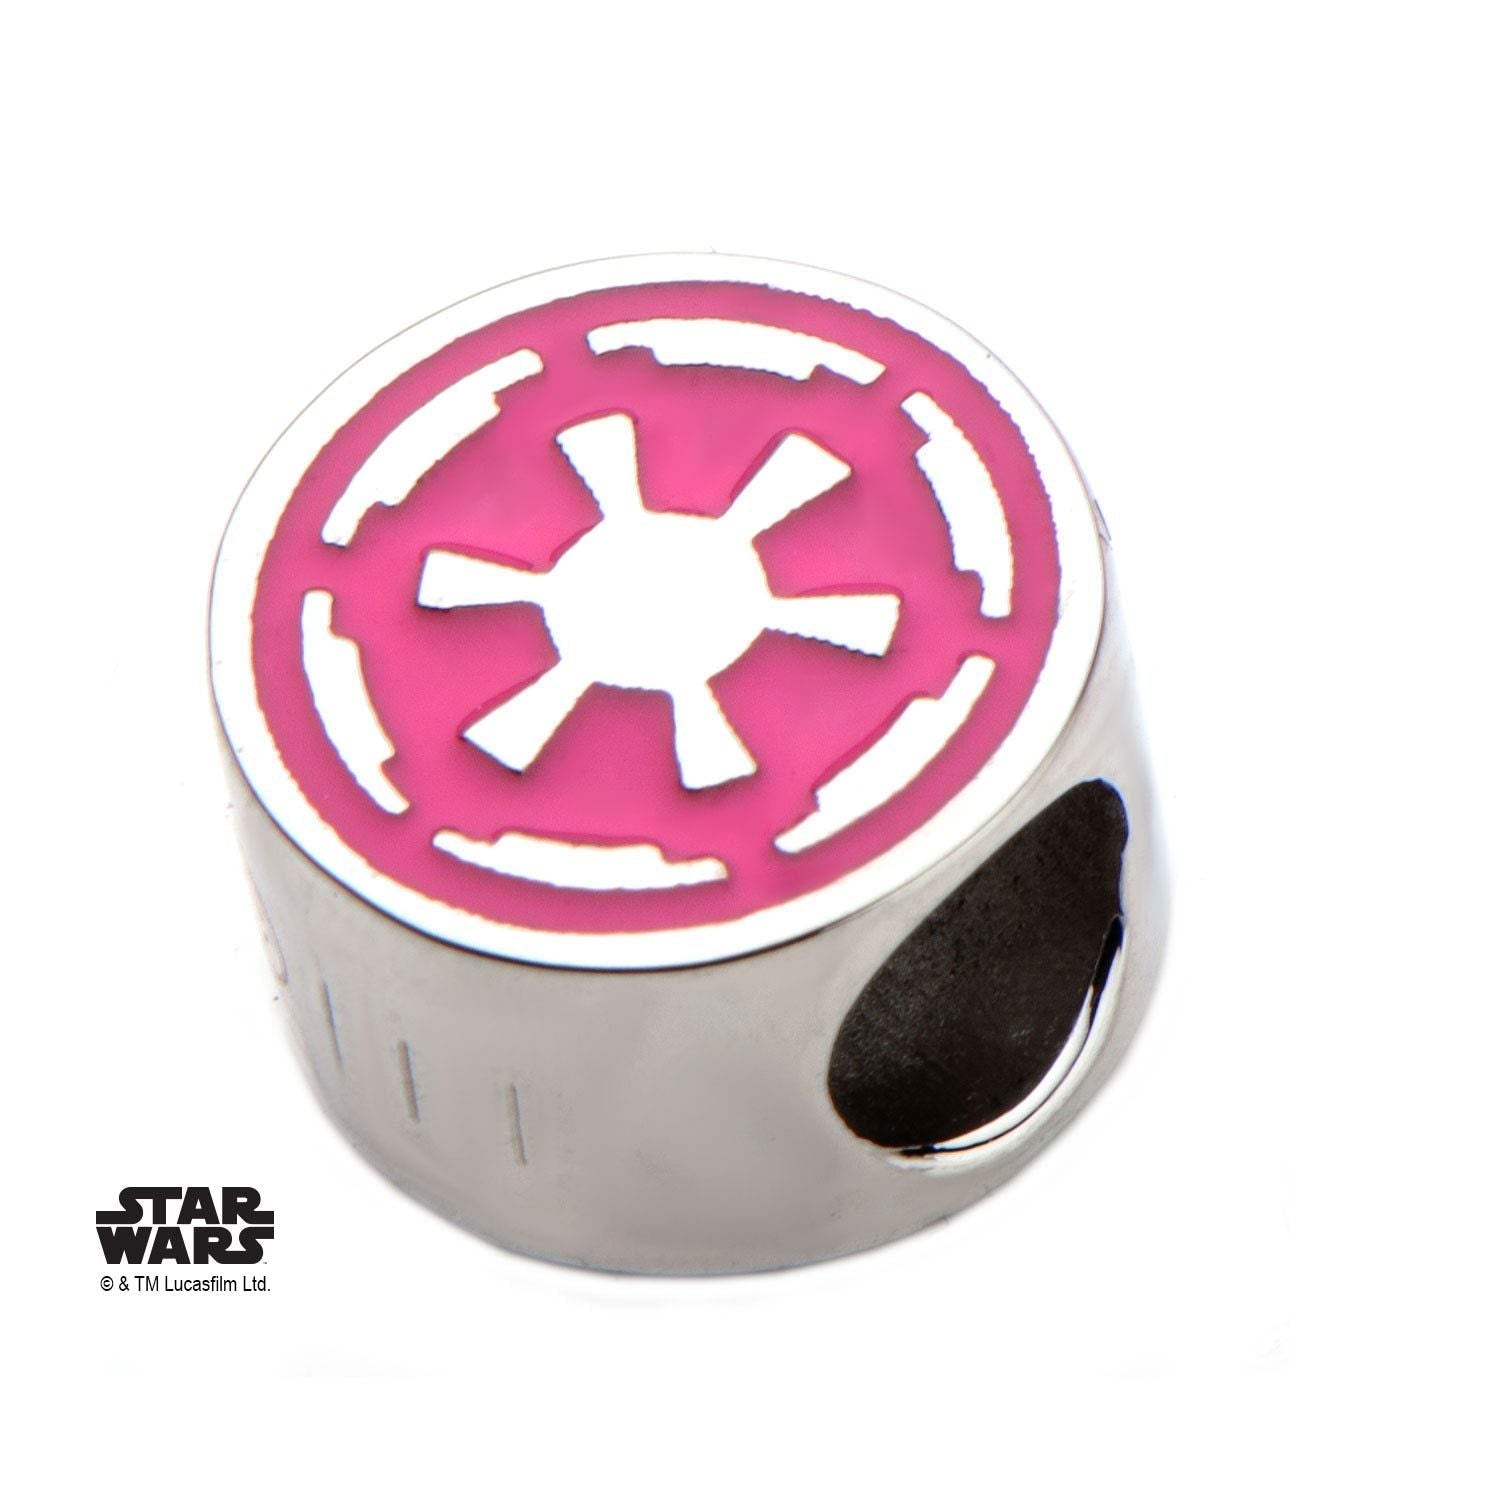 STAR WARS Star Wars Galactic Empire Symbol Bead Charm B -Rebel Bod-RebelBod